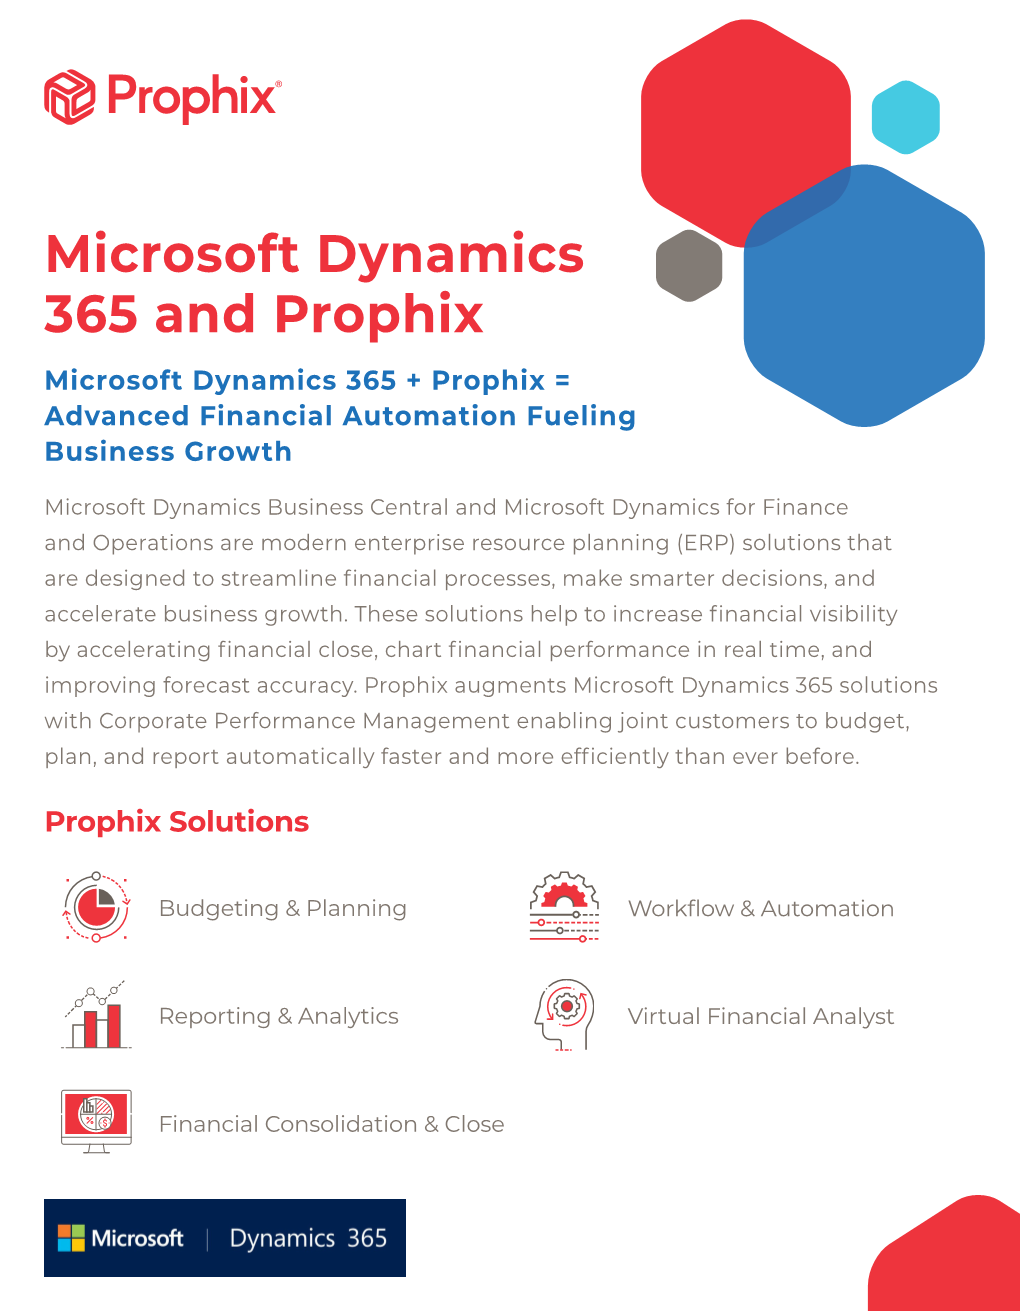 Microsoft Dynamics 365 and Prophix Microsoft Dynamics 365 + Prophix = Advanced Financial Automation Fueling Business Growth